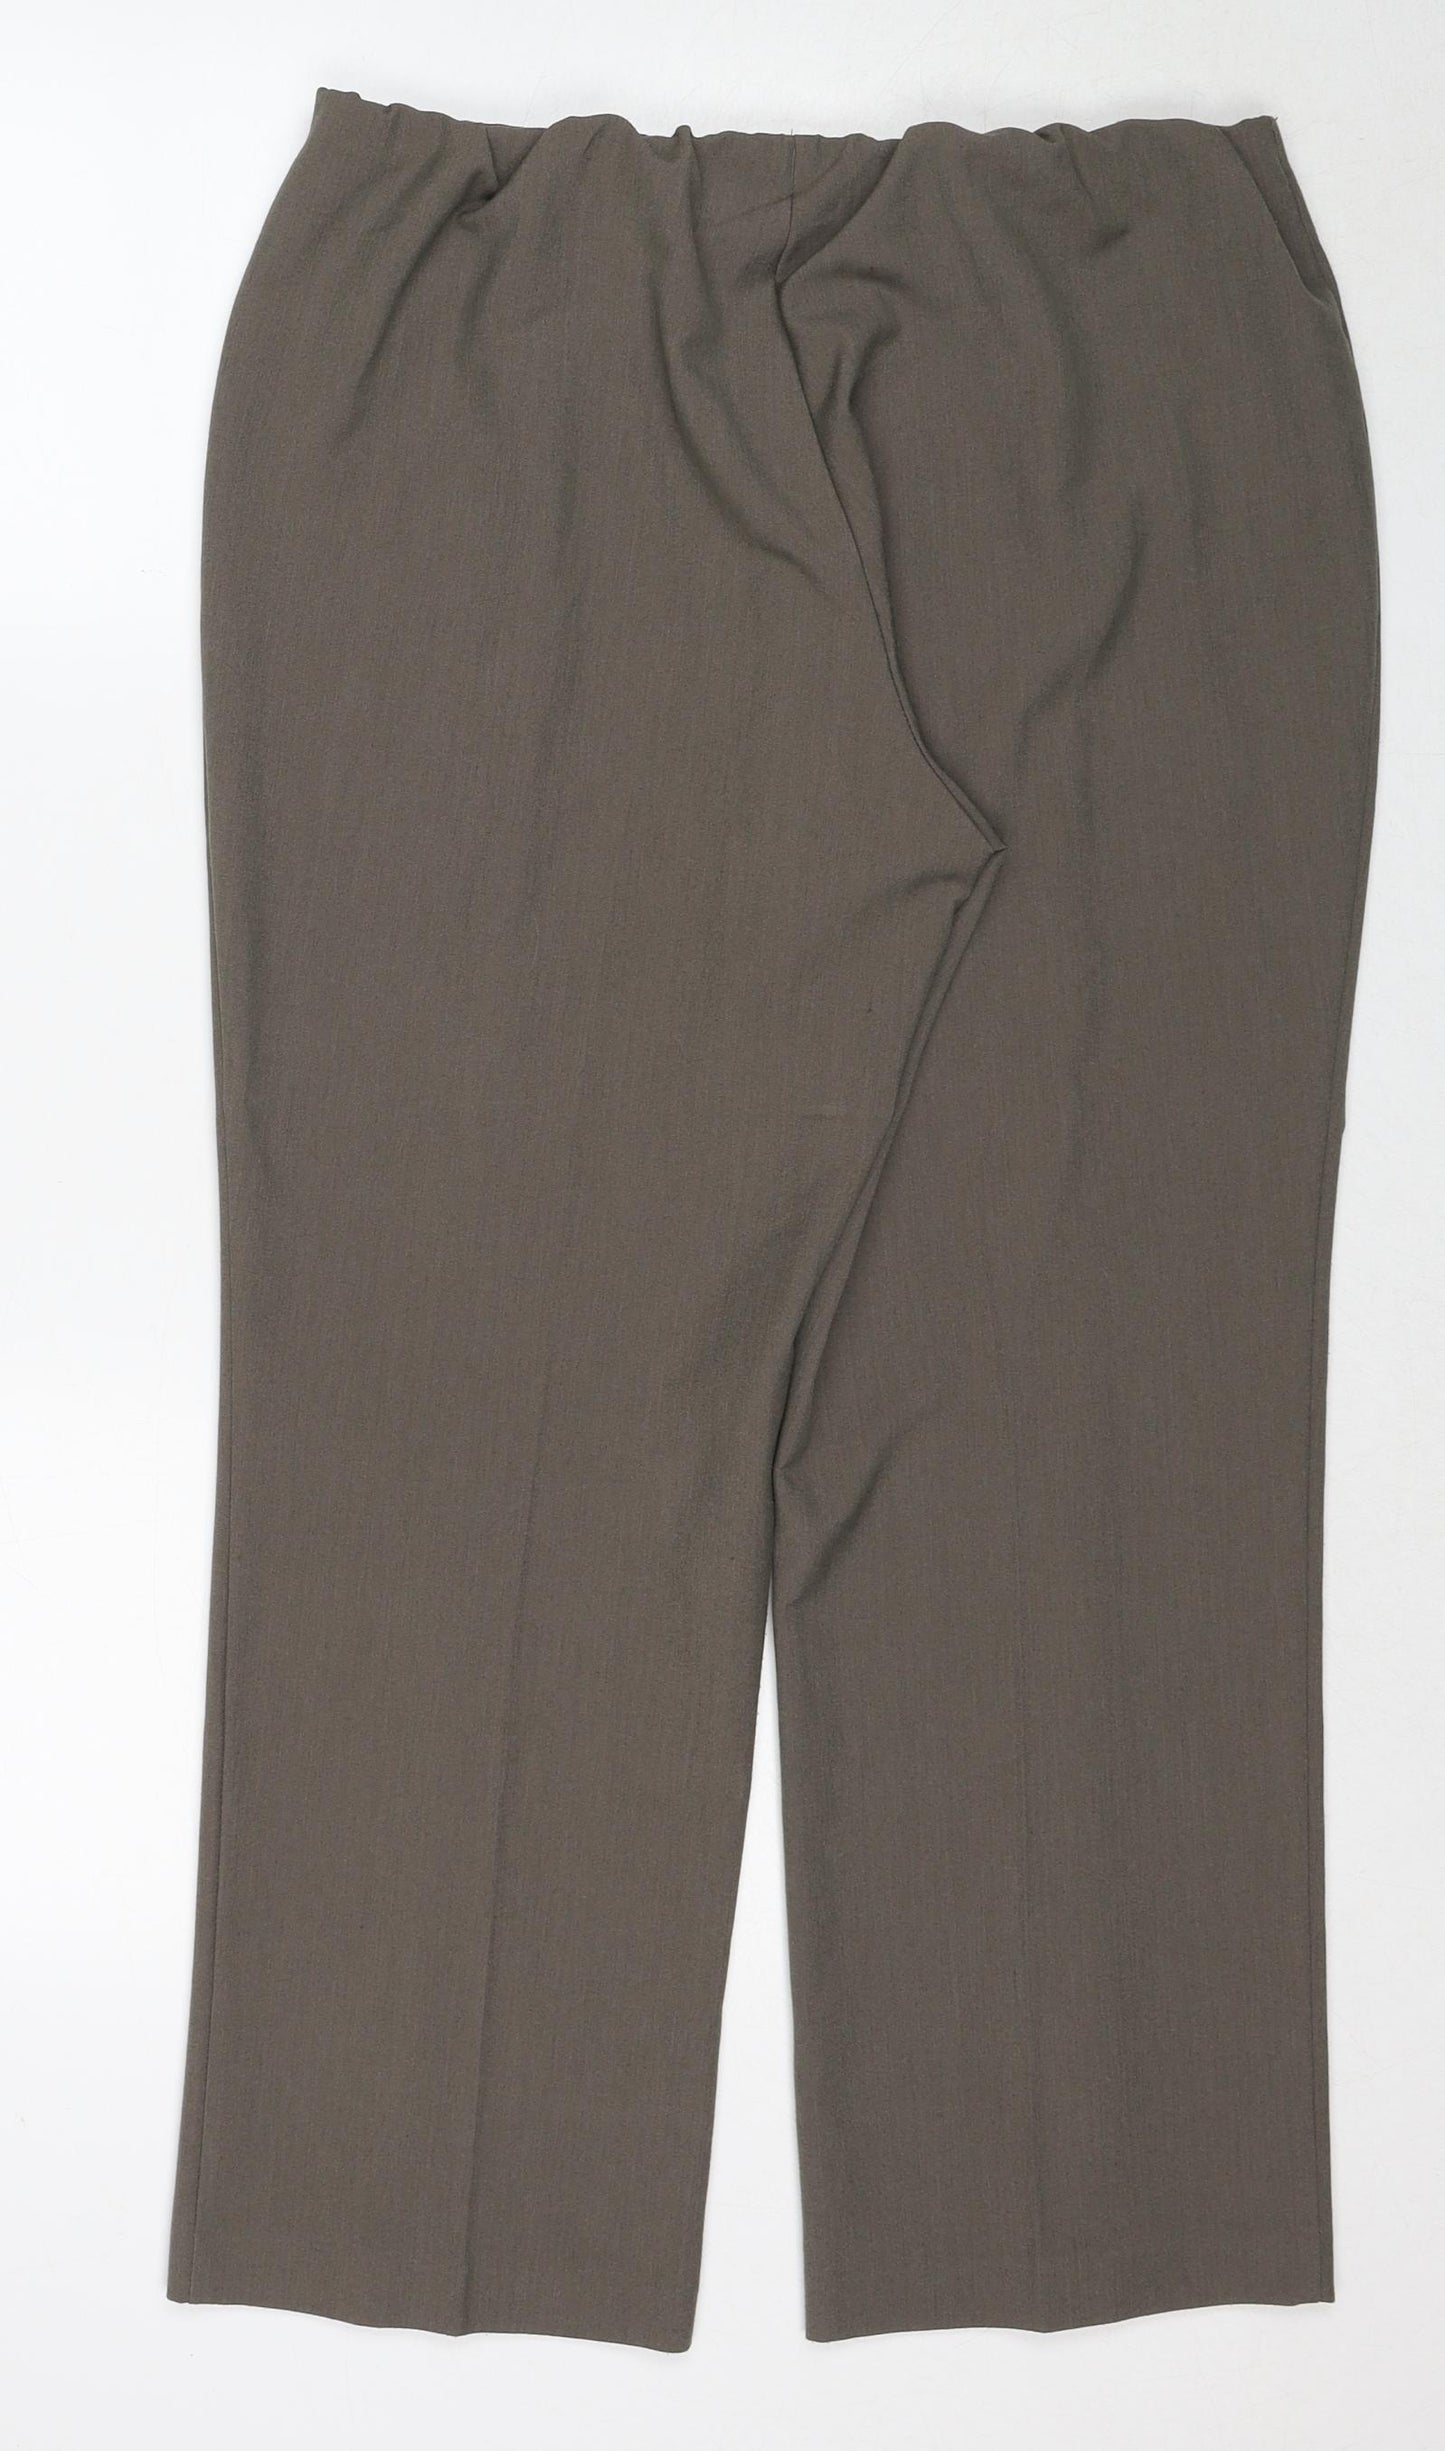 Bonmarché Womens Beige Polyester Trousers Size 16 Regular